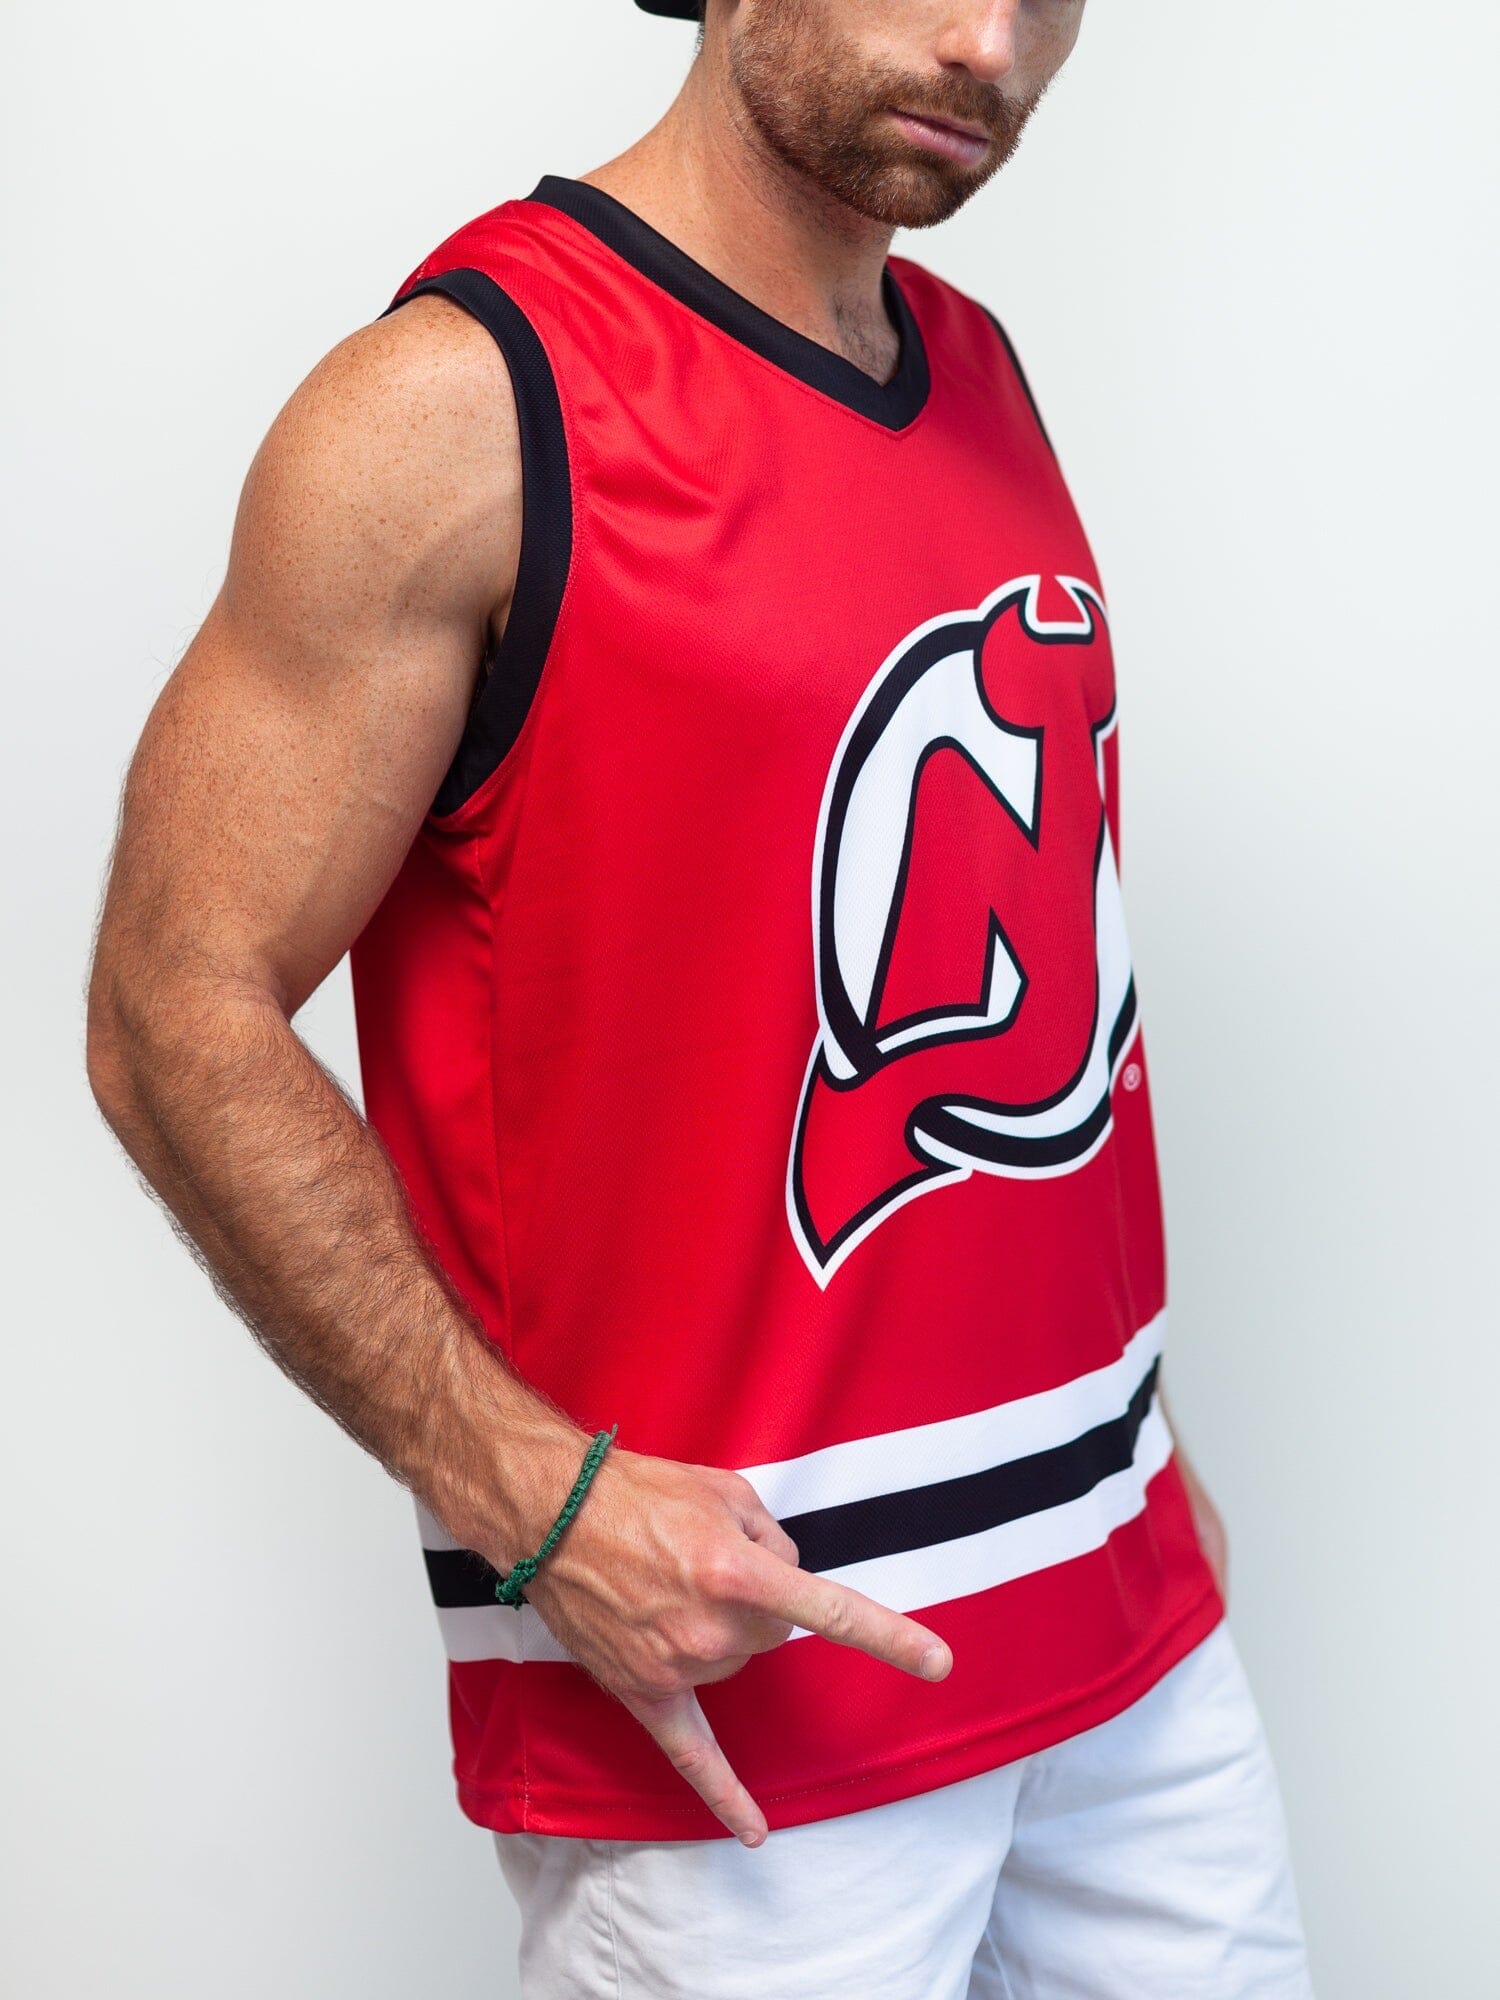 New Jersey Devils official merchandise